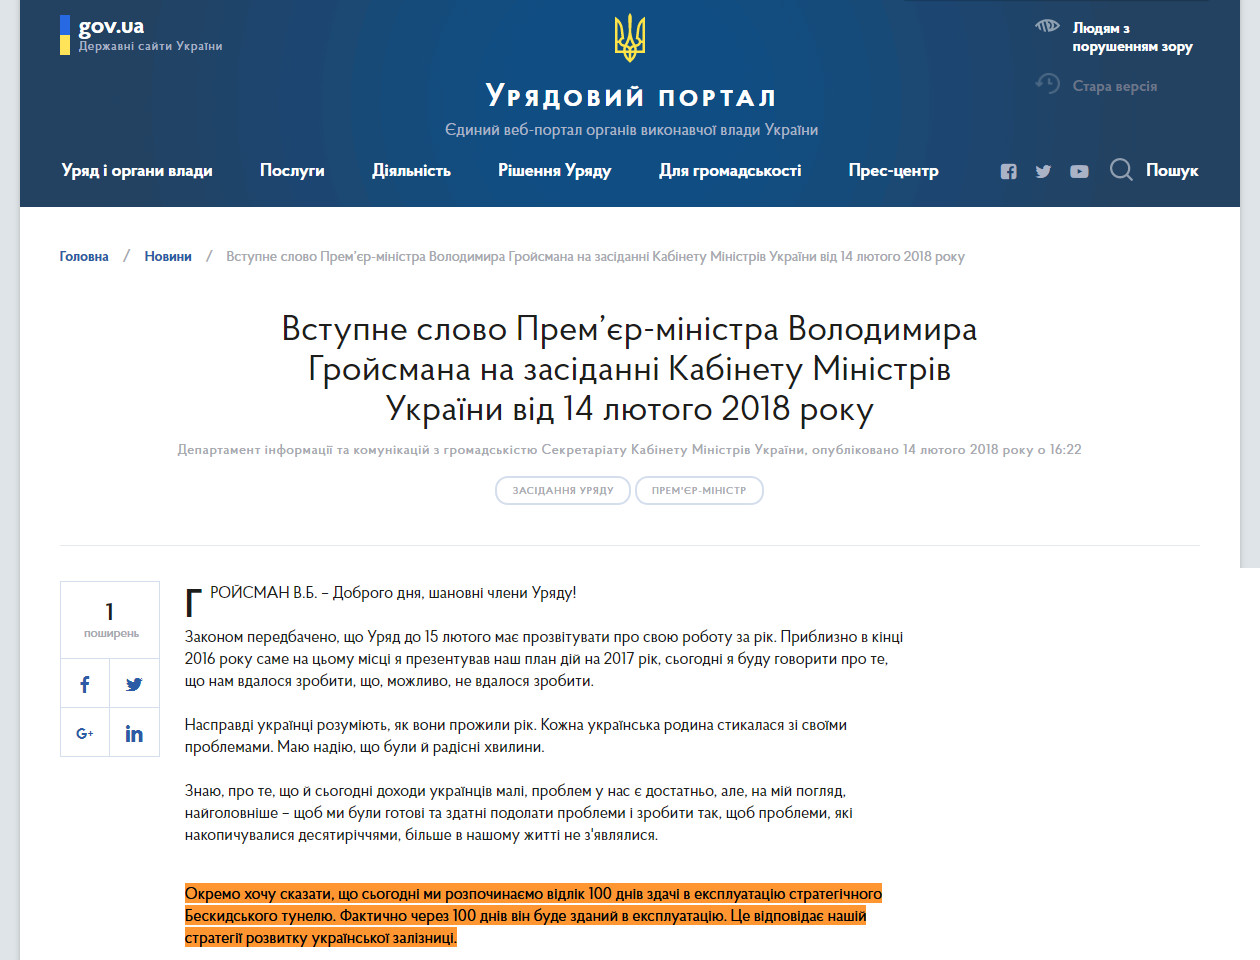 https://www.kmu.gov.ua/ua/news/vstupne-slovo-premyer-ministra-volodimira-grojsmana-na-zasidanni-kabinetu-ministriv-ukrayini-vid-14-lyutogo-2018-roku